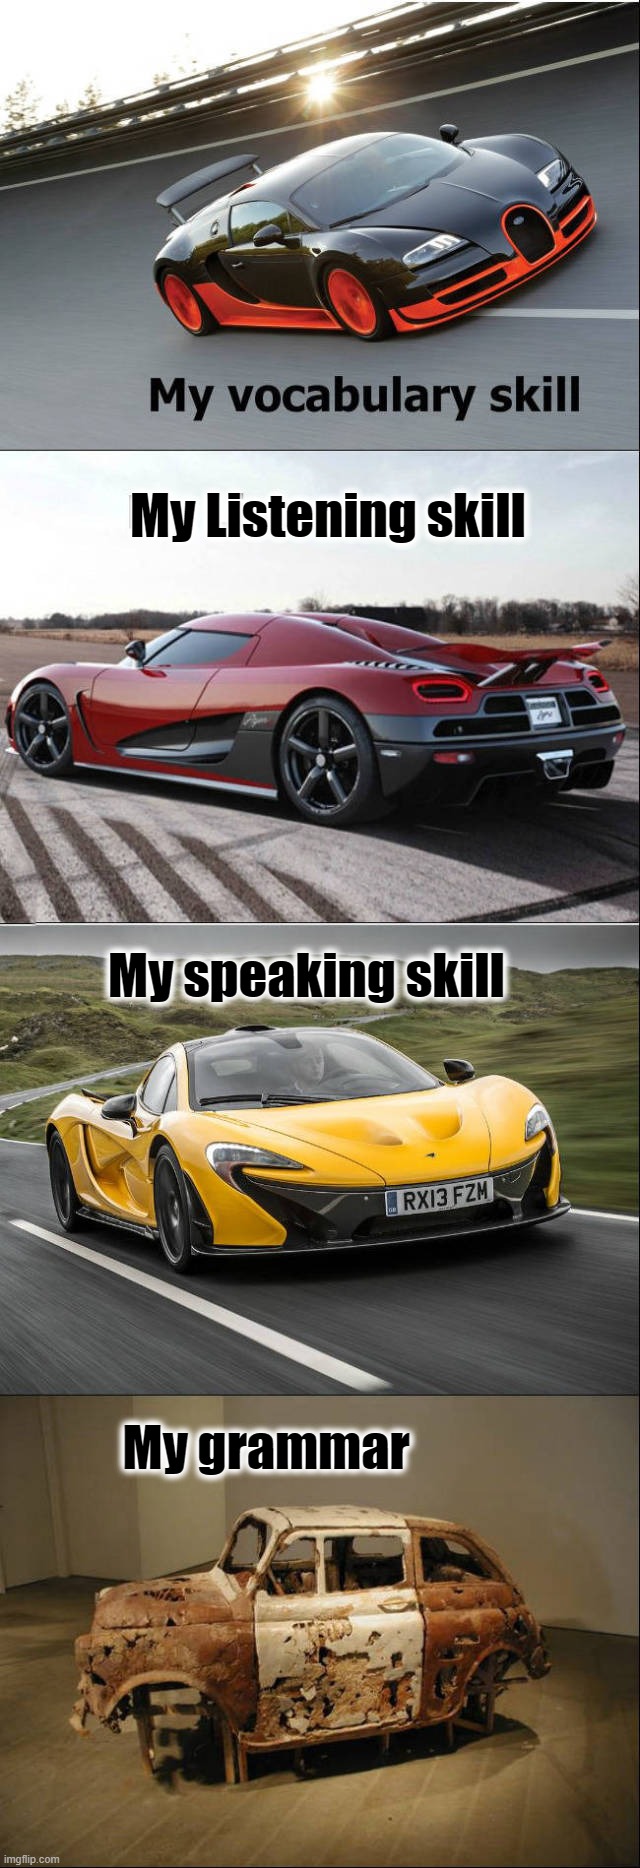  My Listening skill; My speaking skill; My grammar | image tagged in skills | made w/ Imgflip meme maker